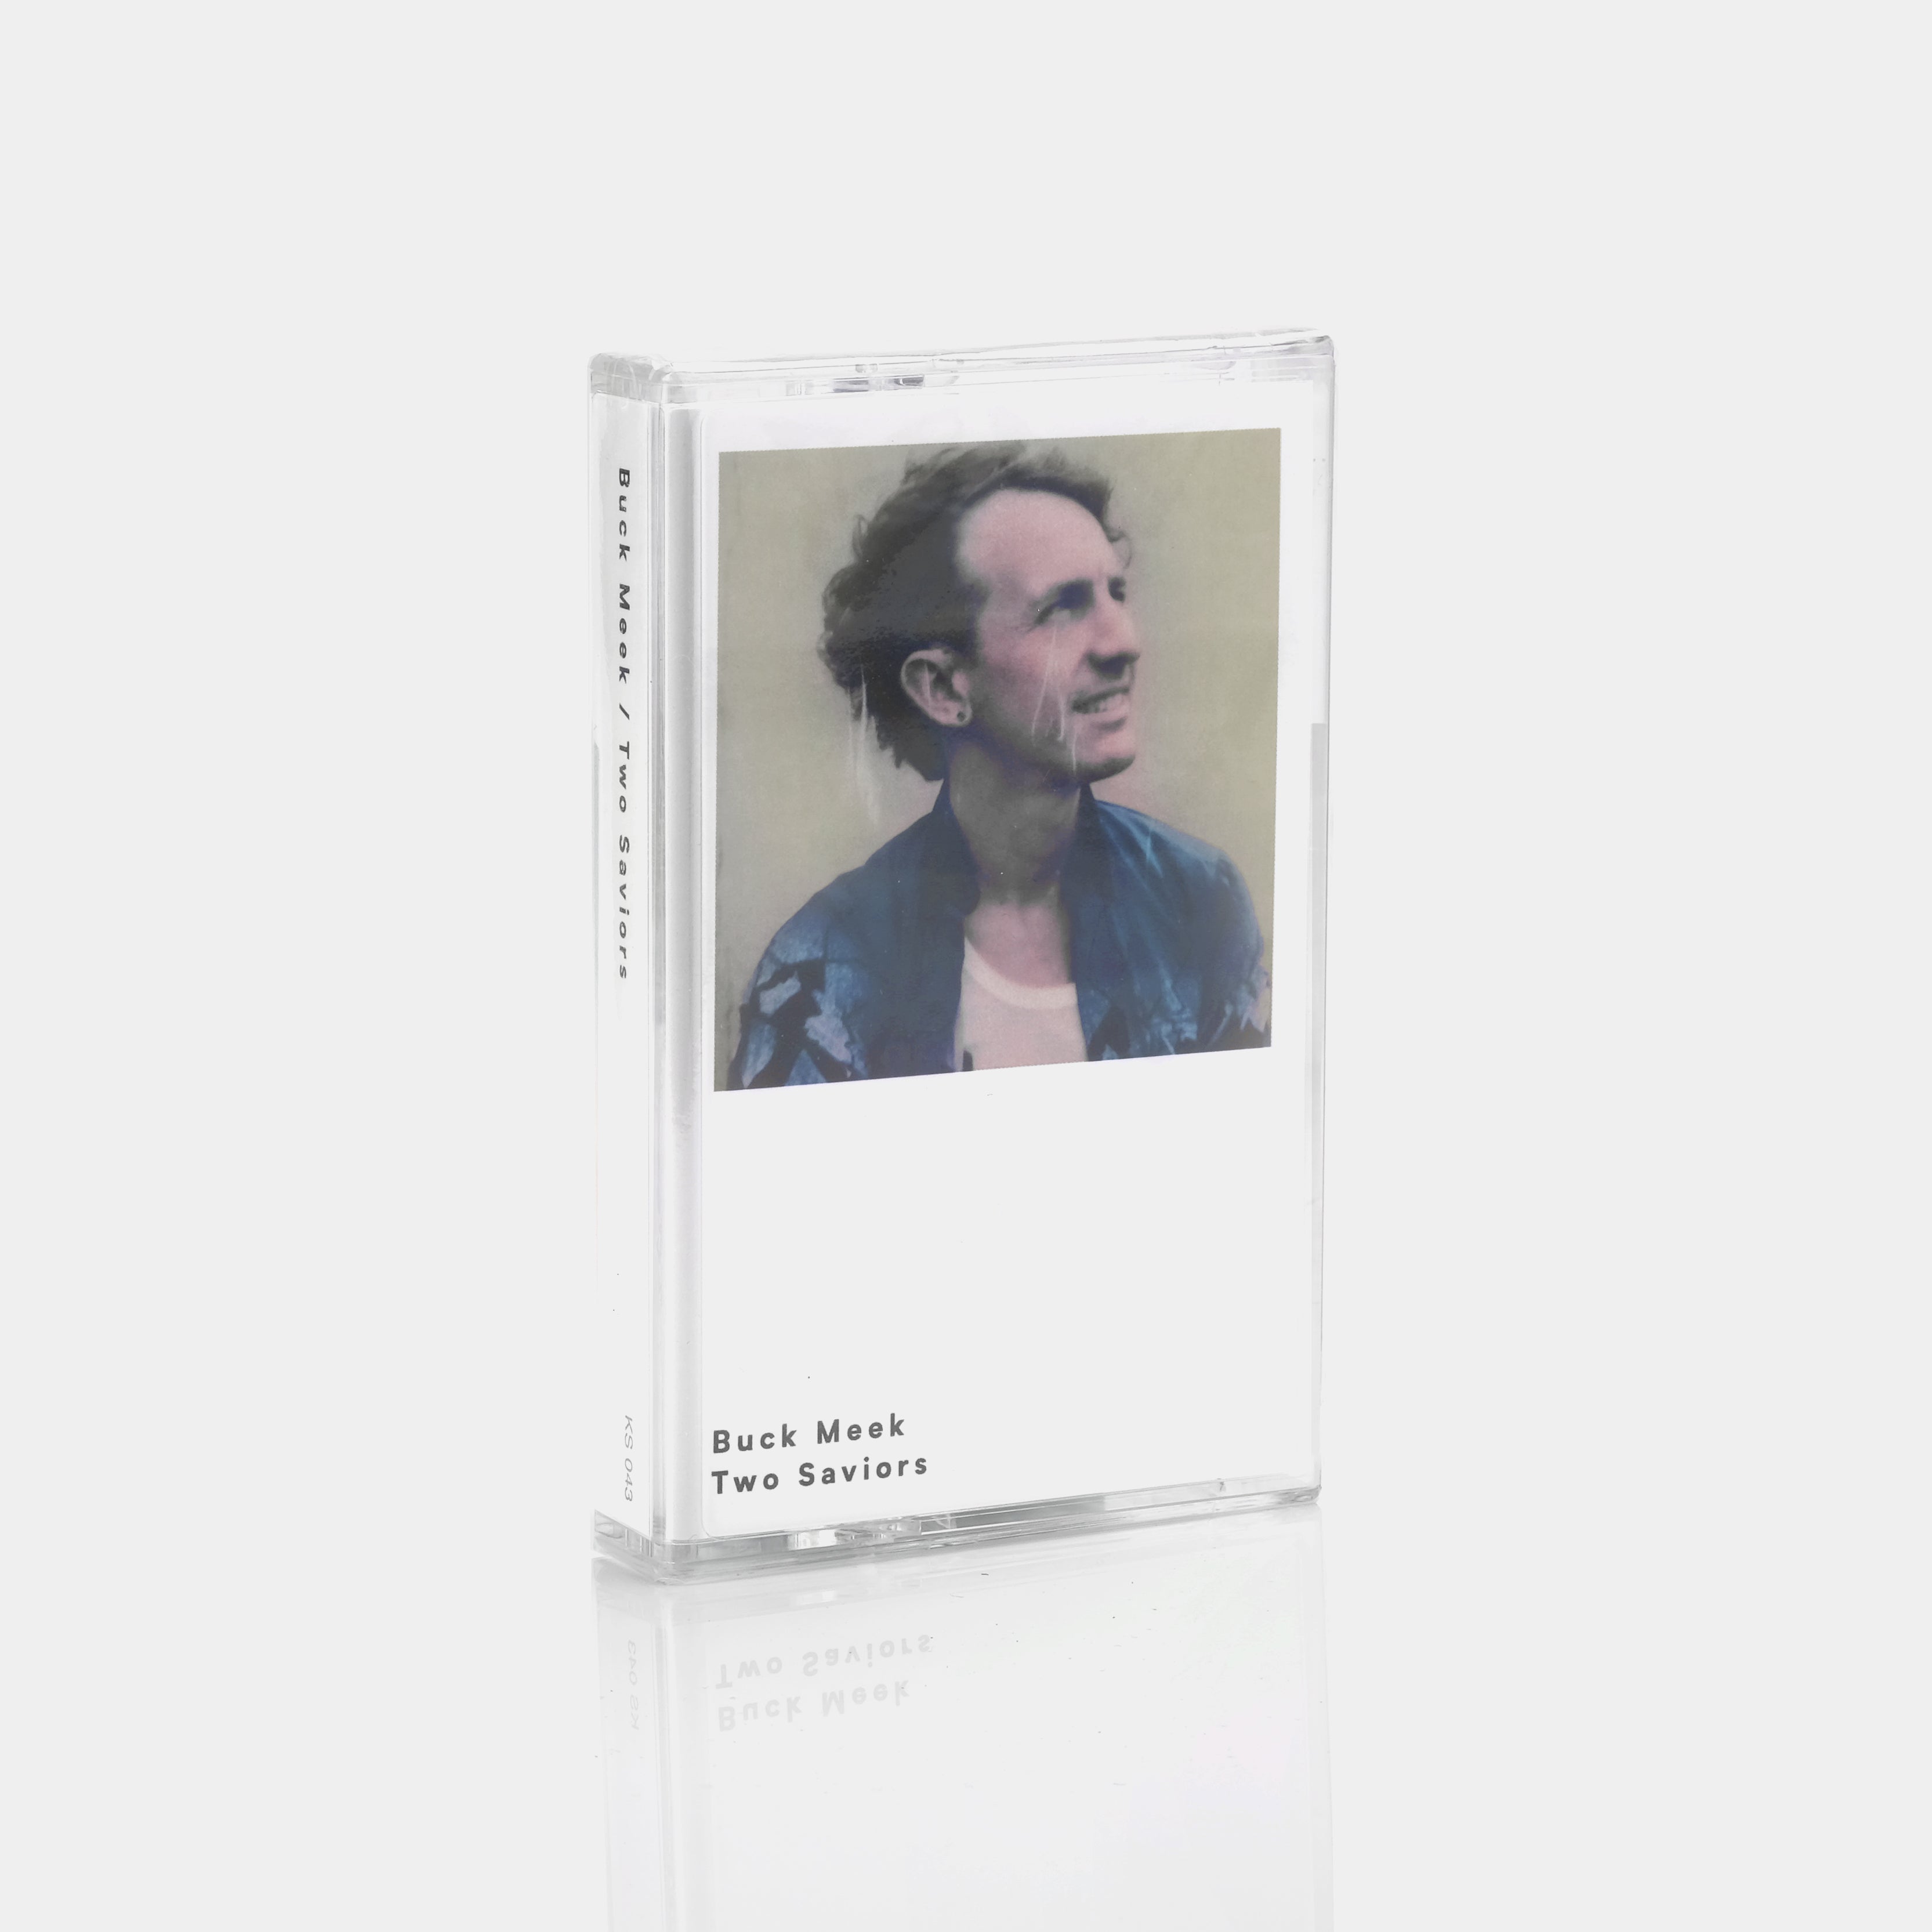 Buck Meek – Two Saviors Cassette Tape